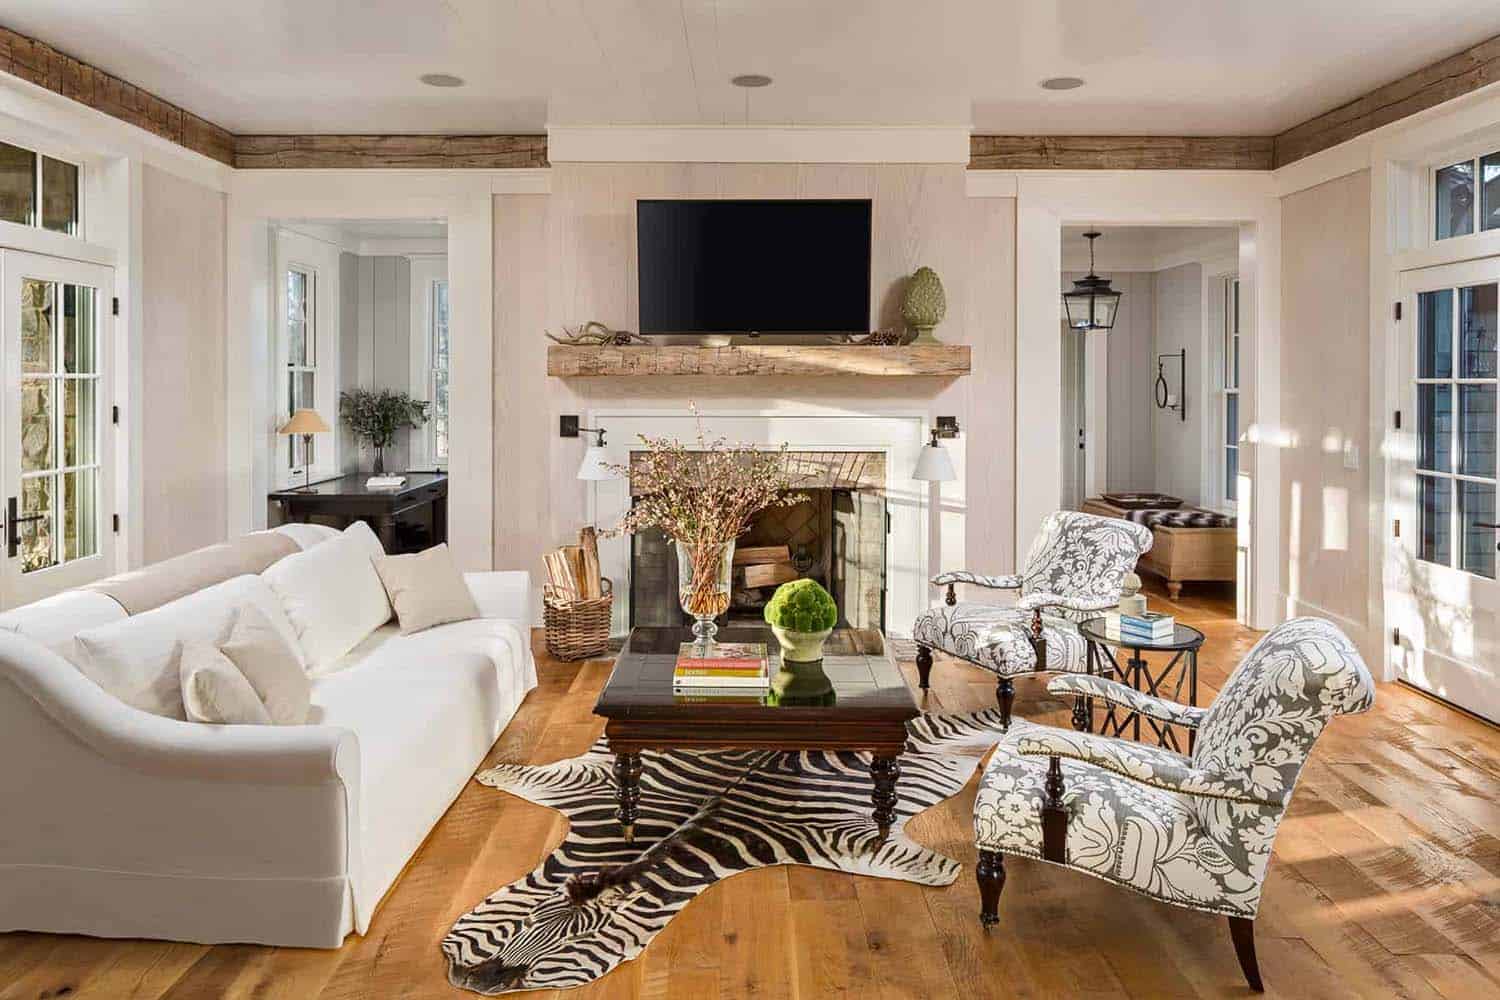 craftsman style living room